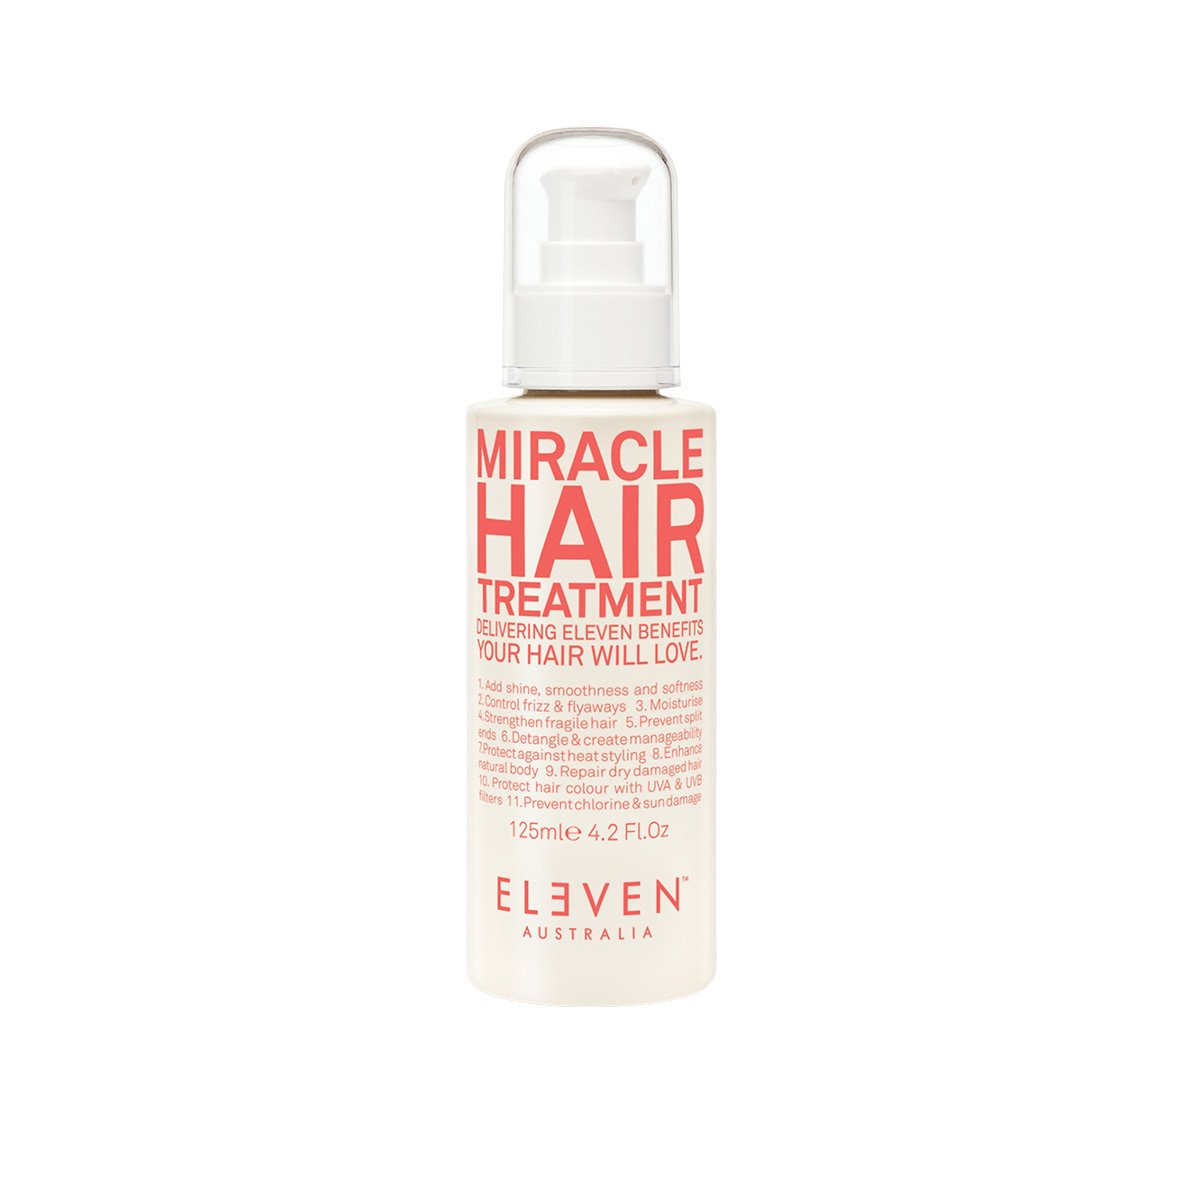 ELEVEN Australia Miracle Hair Treatment 125 ml.jpg